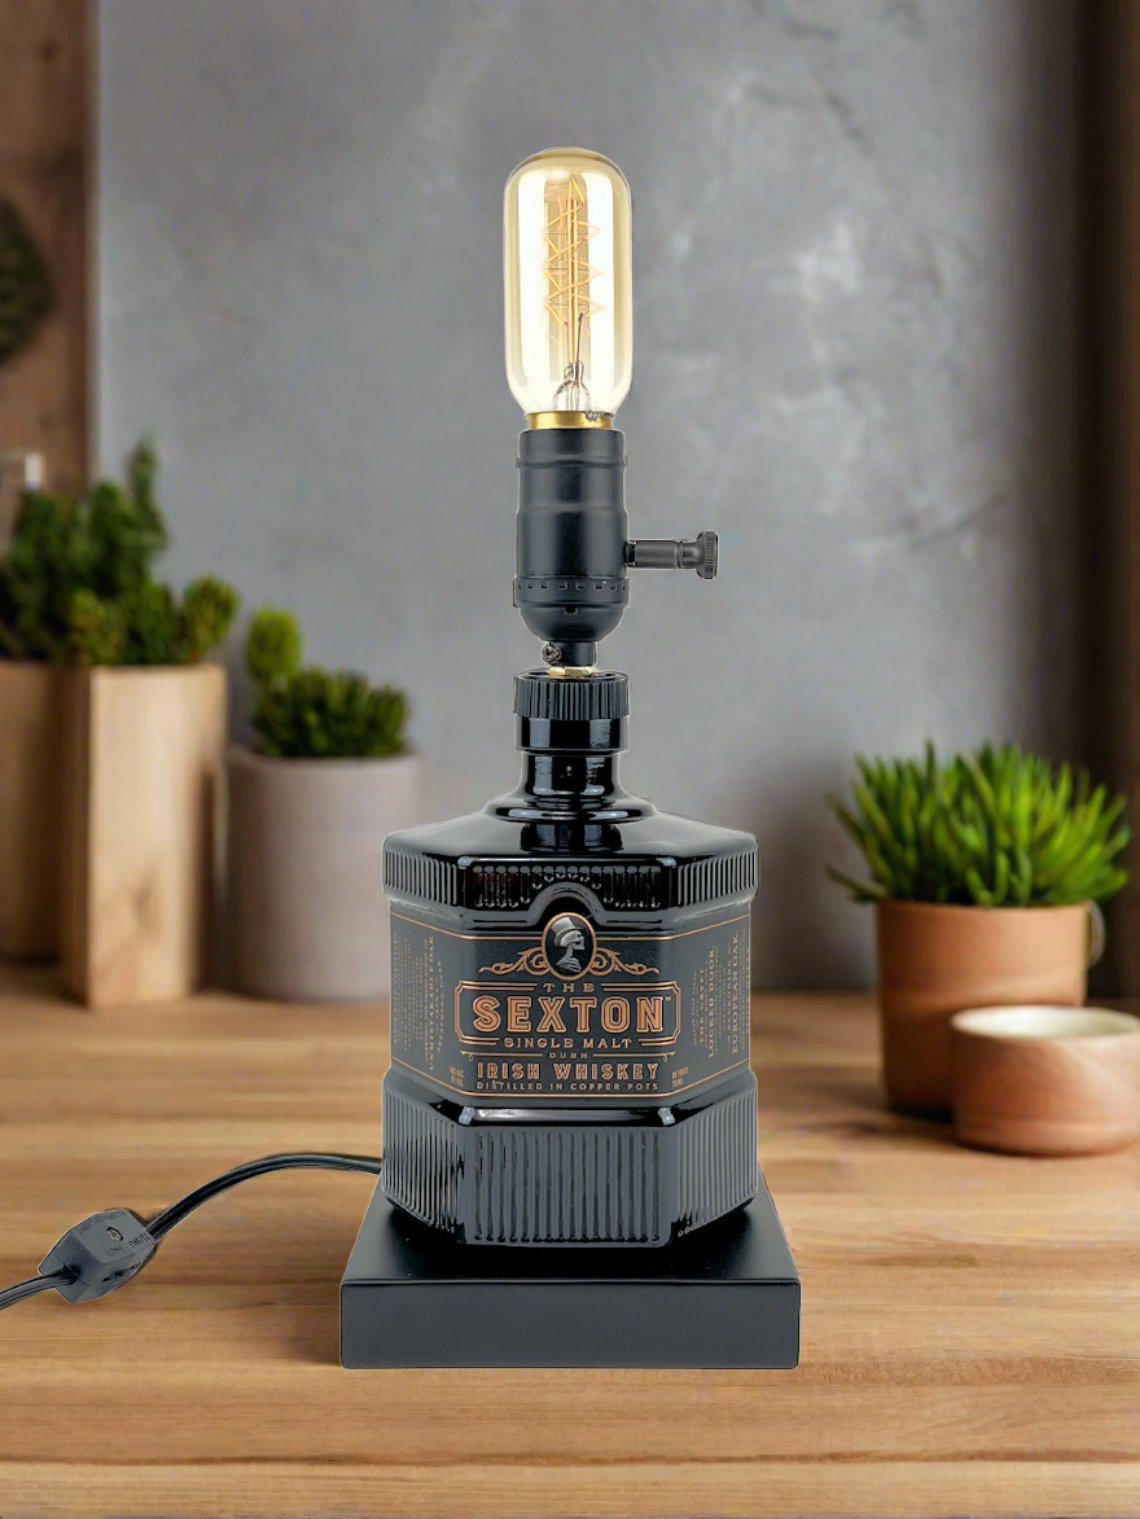 The Sexton Whiskey Bottle Lamp